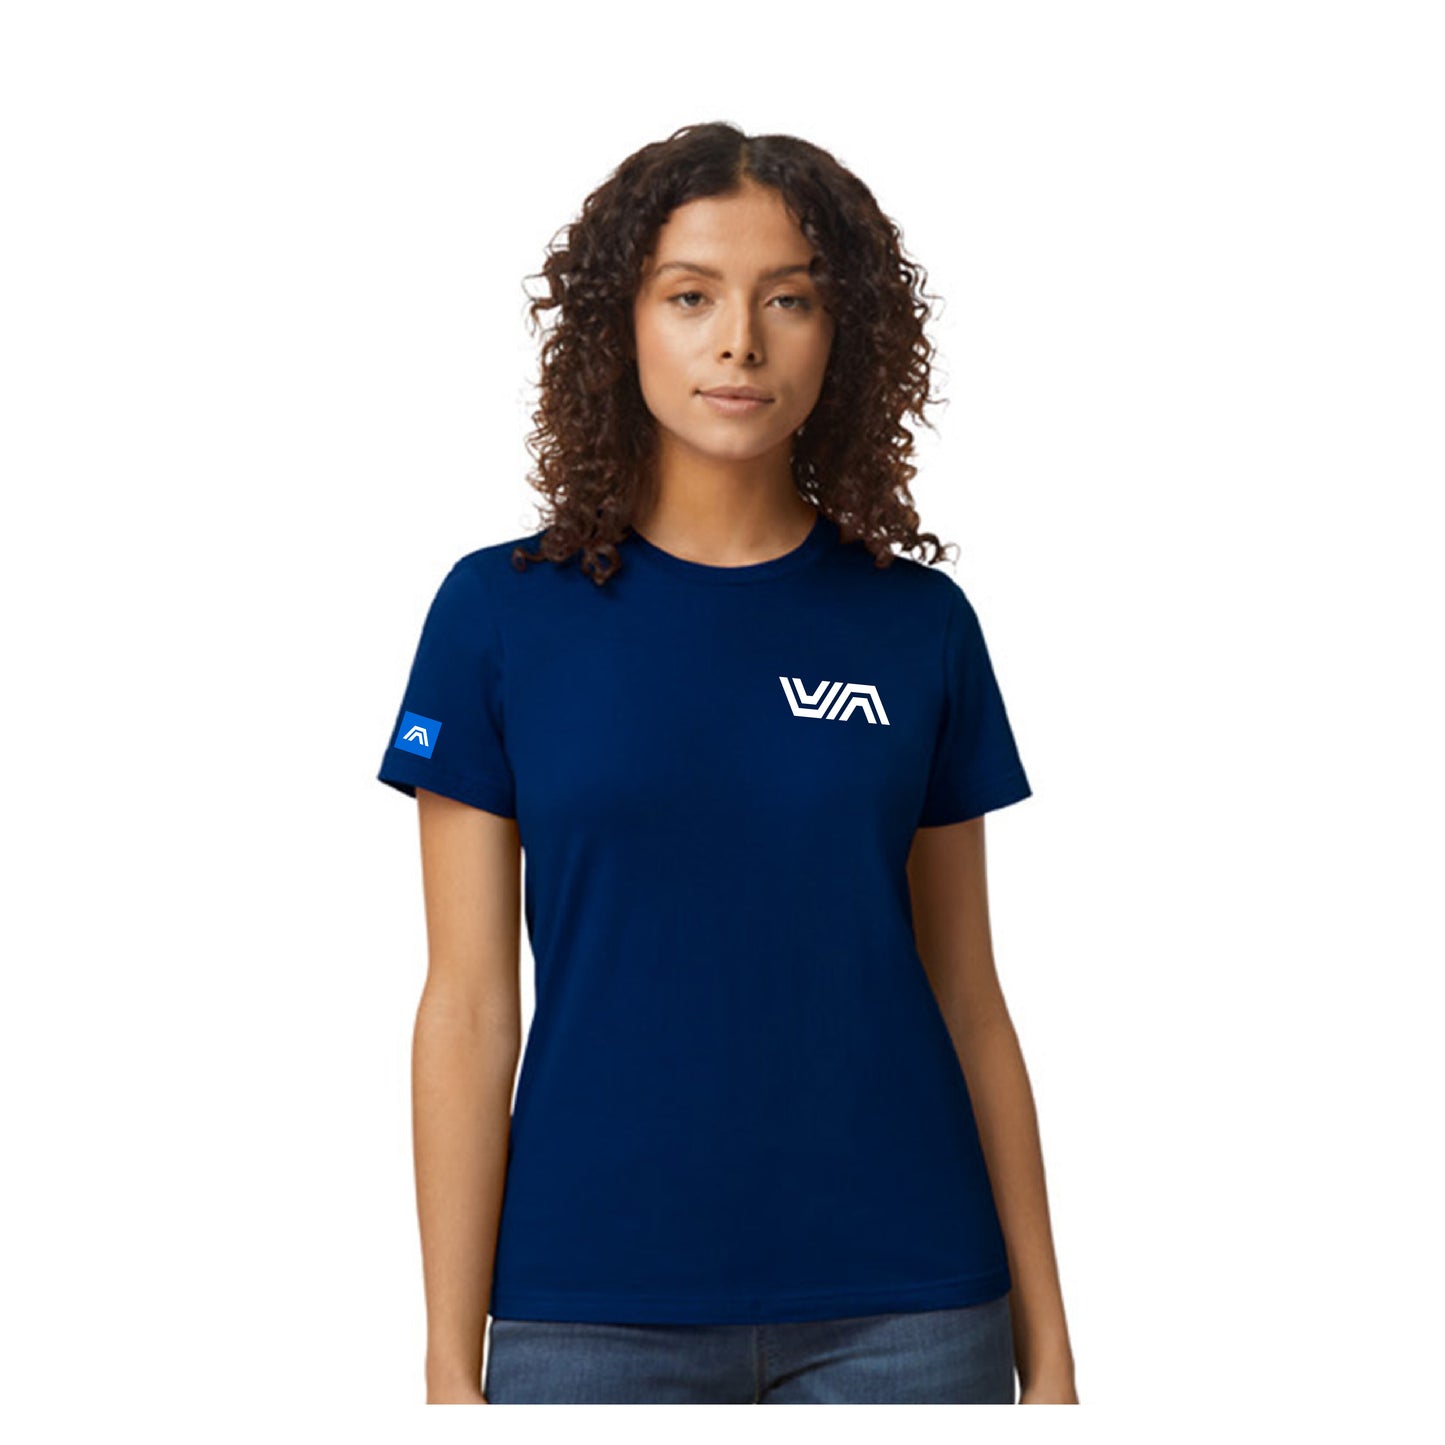 Marine Force ® Fluctuation Cotton T-Shirt